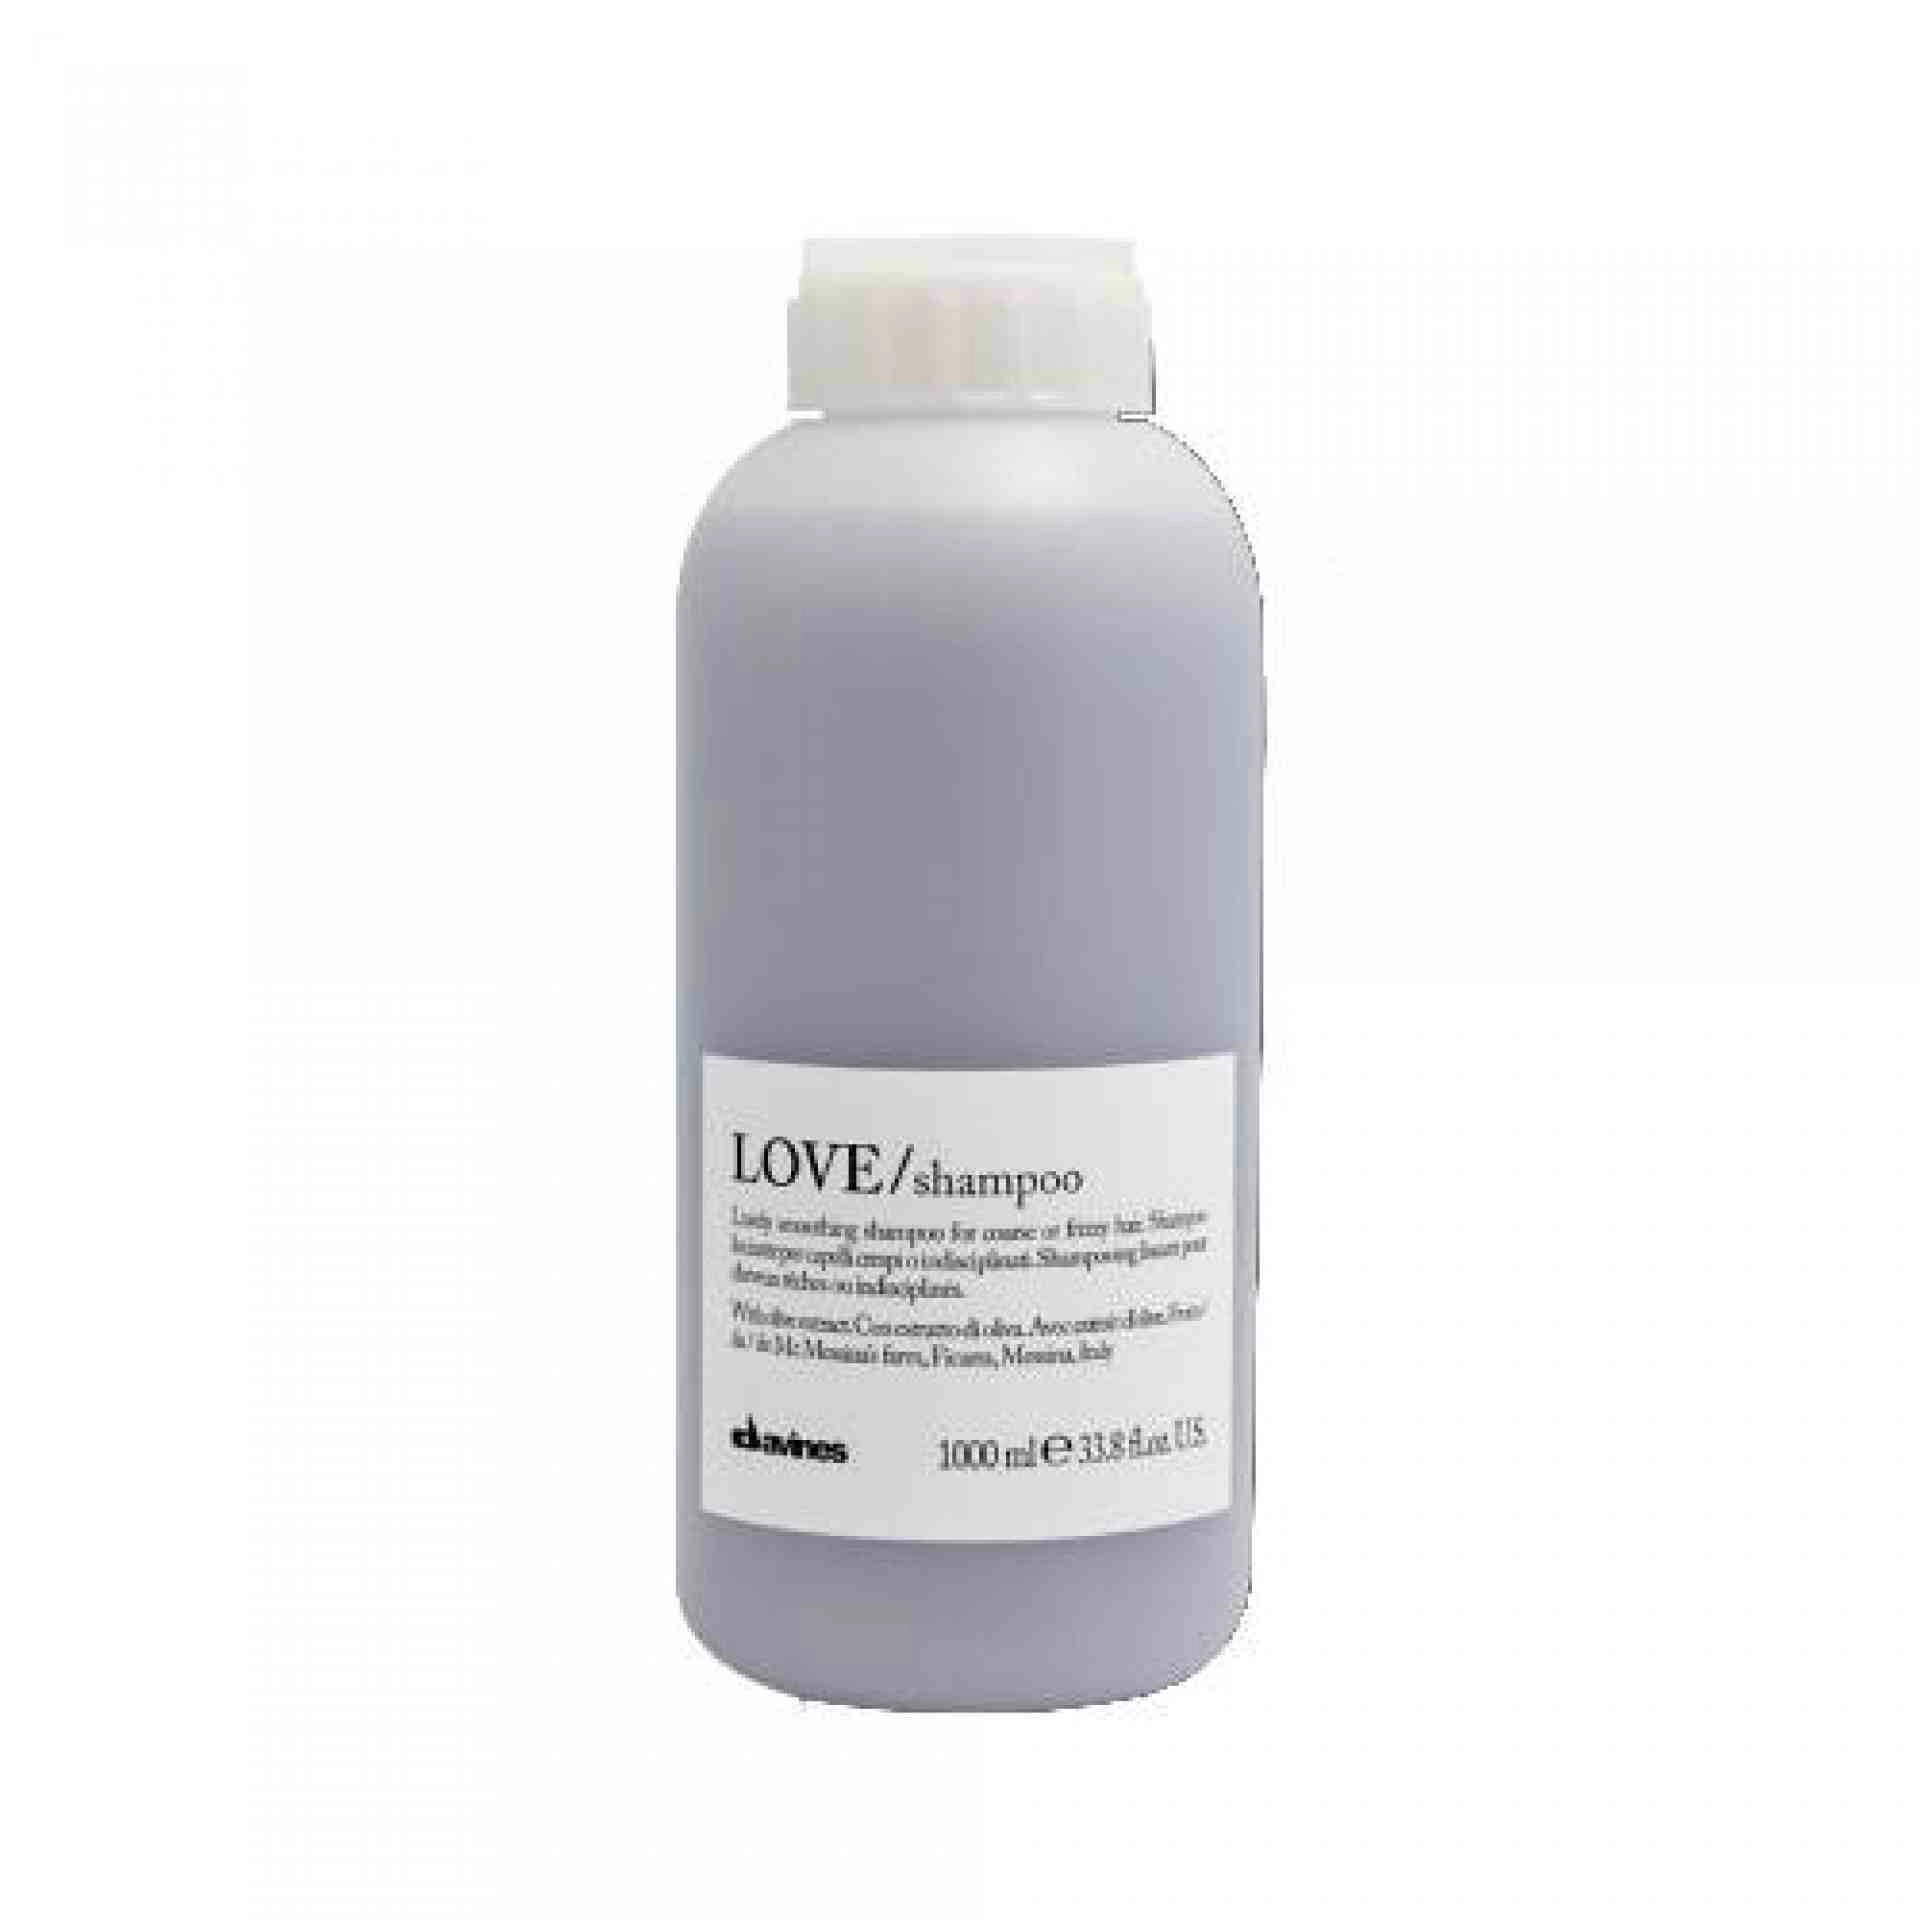 LOVE SMOOTHING / Shampoo | Champú disciplinante - Essential Haircare - Davines ®